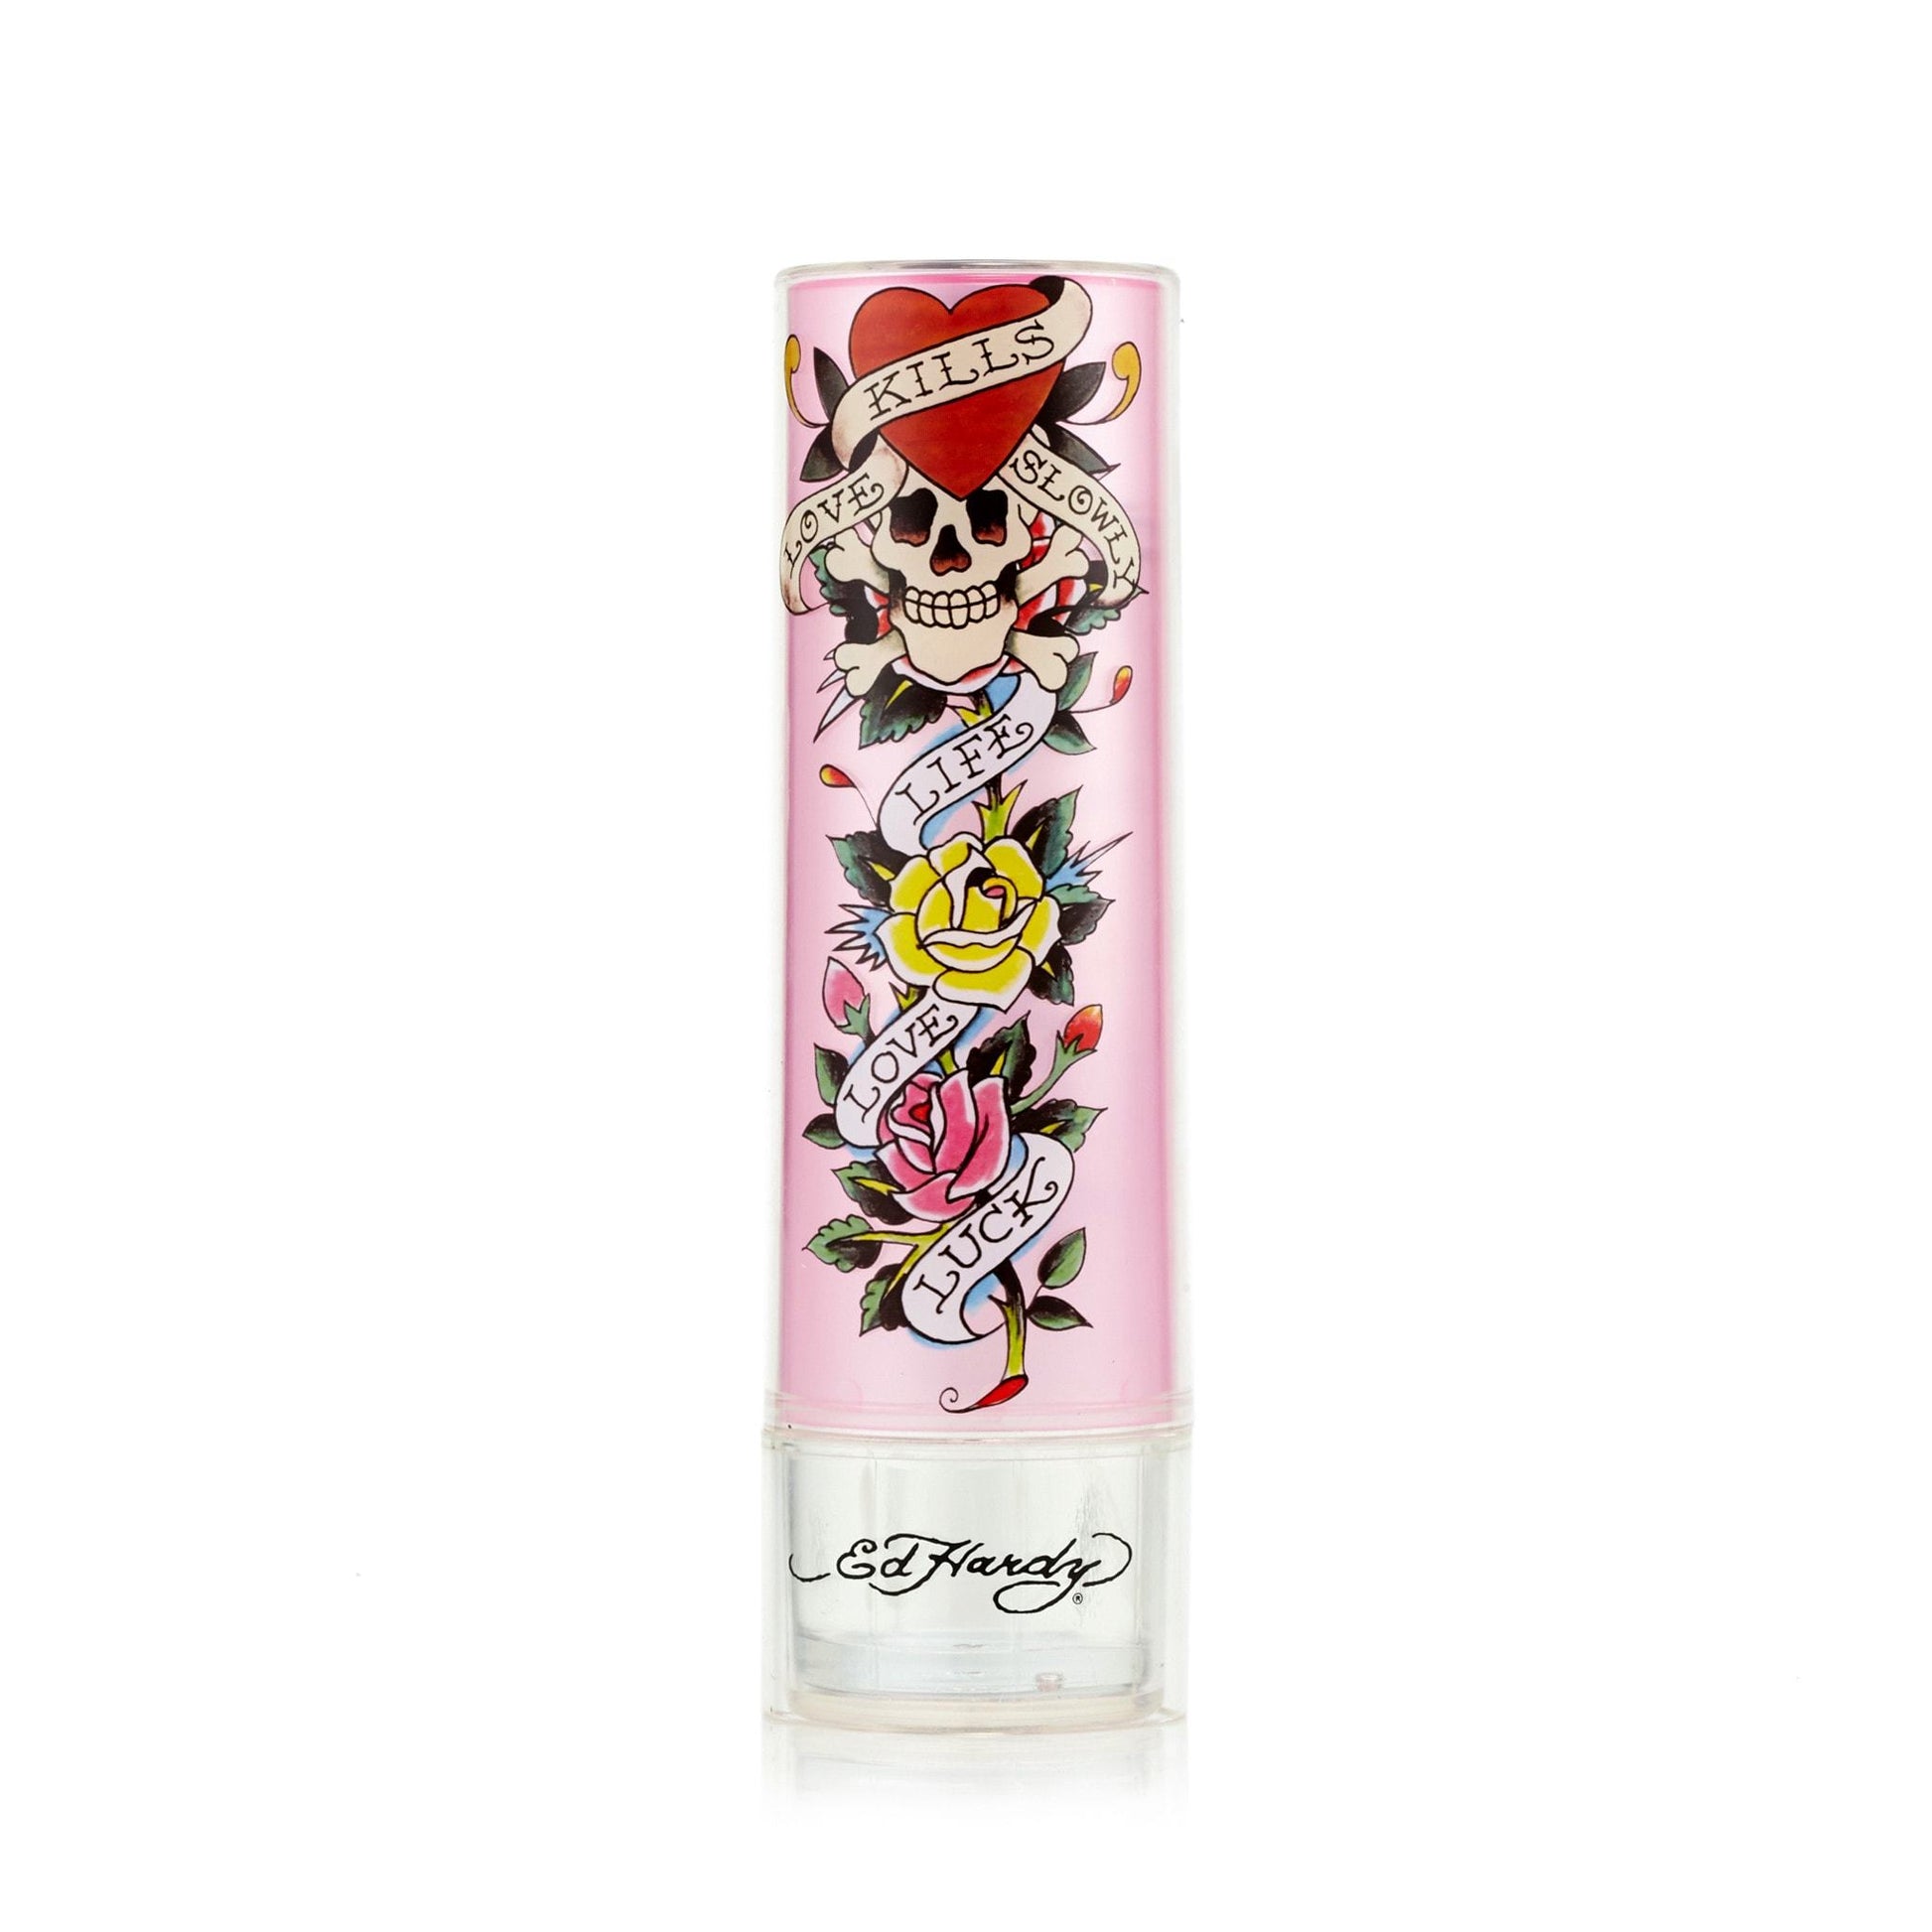 Ed Hardy Eau de Parfum Spray for Women by Christian Audigier, Product image 2